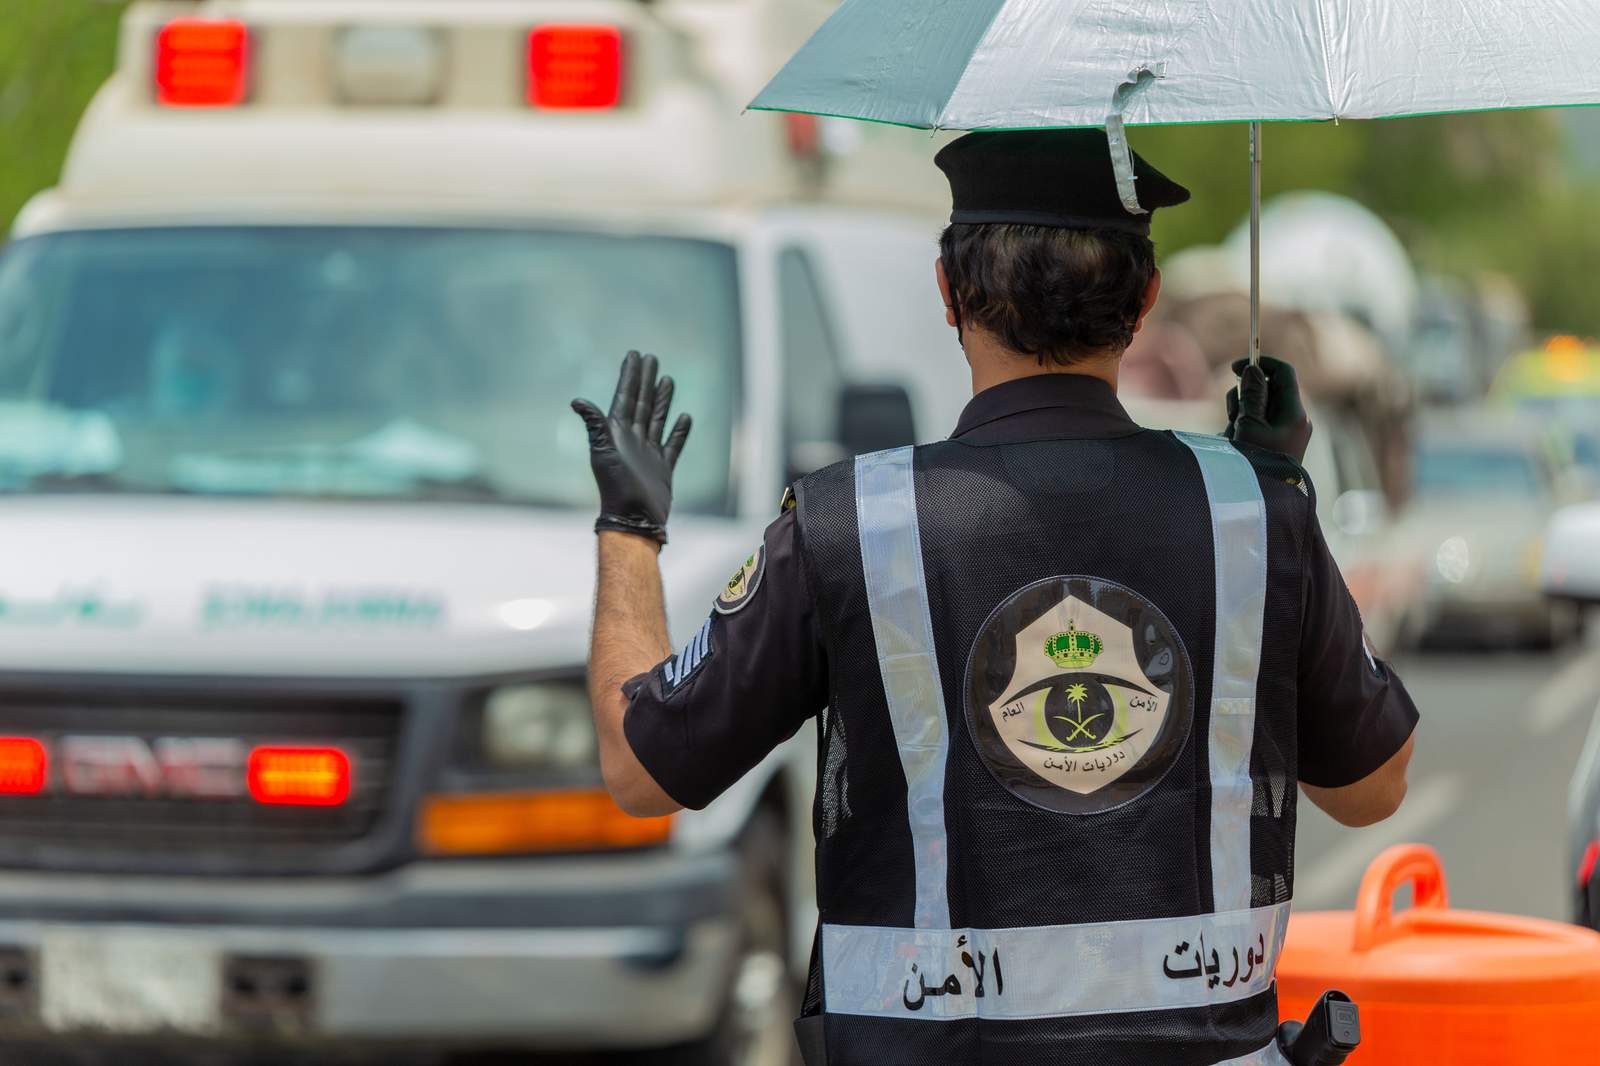 Pilgrims arrive in Mecca for downsized hajj amid pandemic